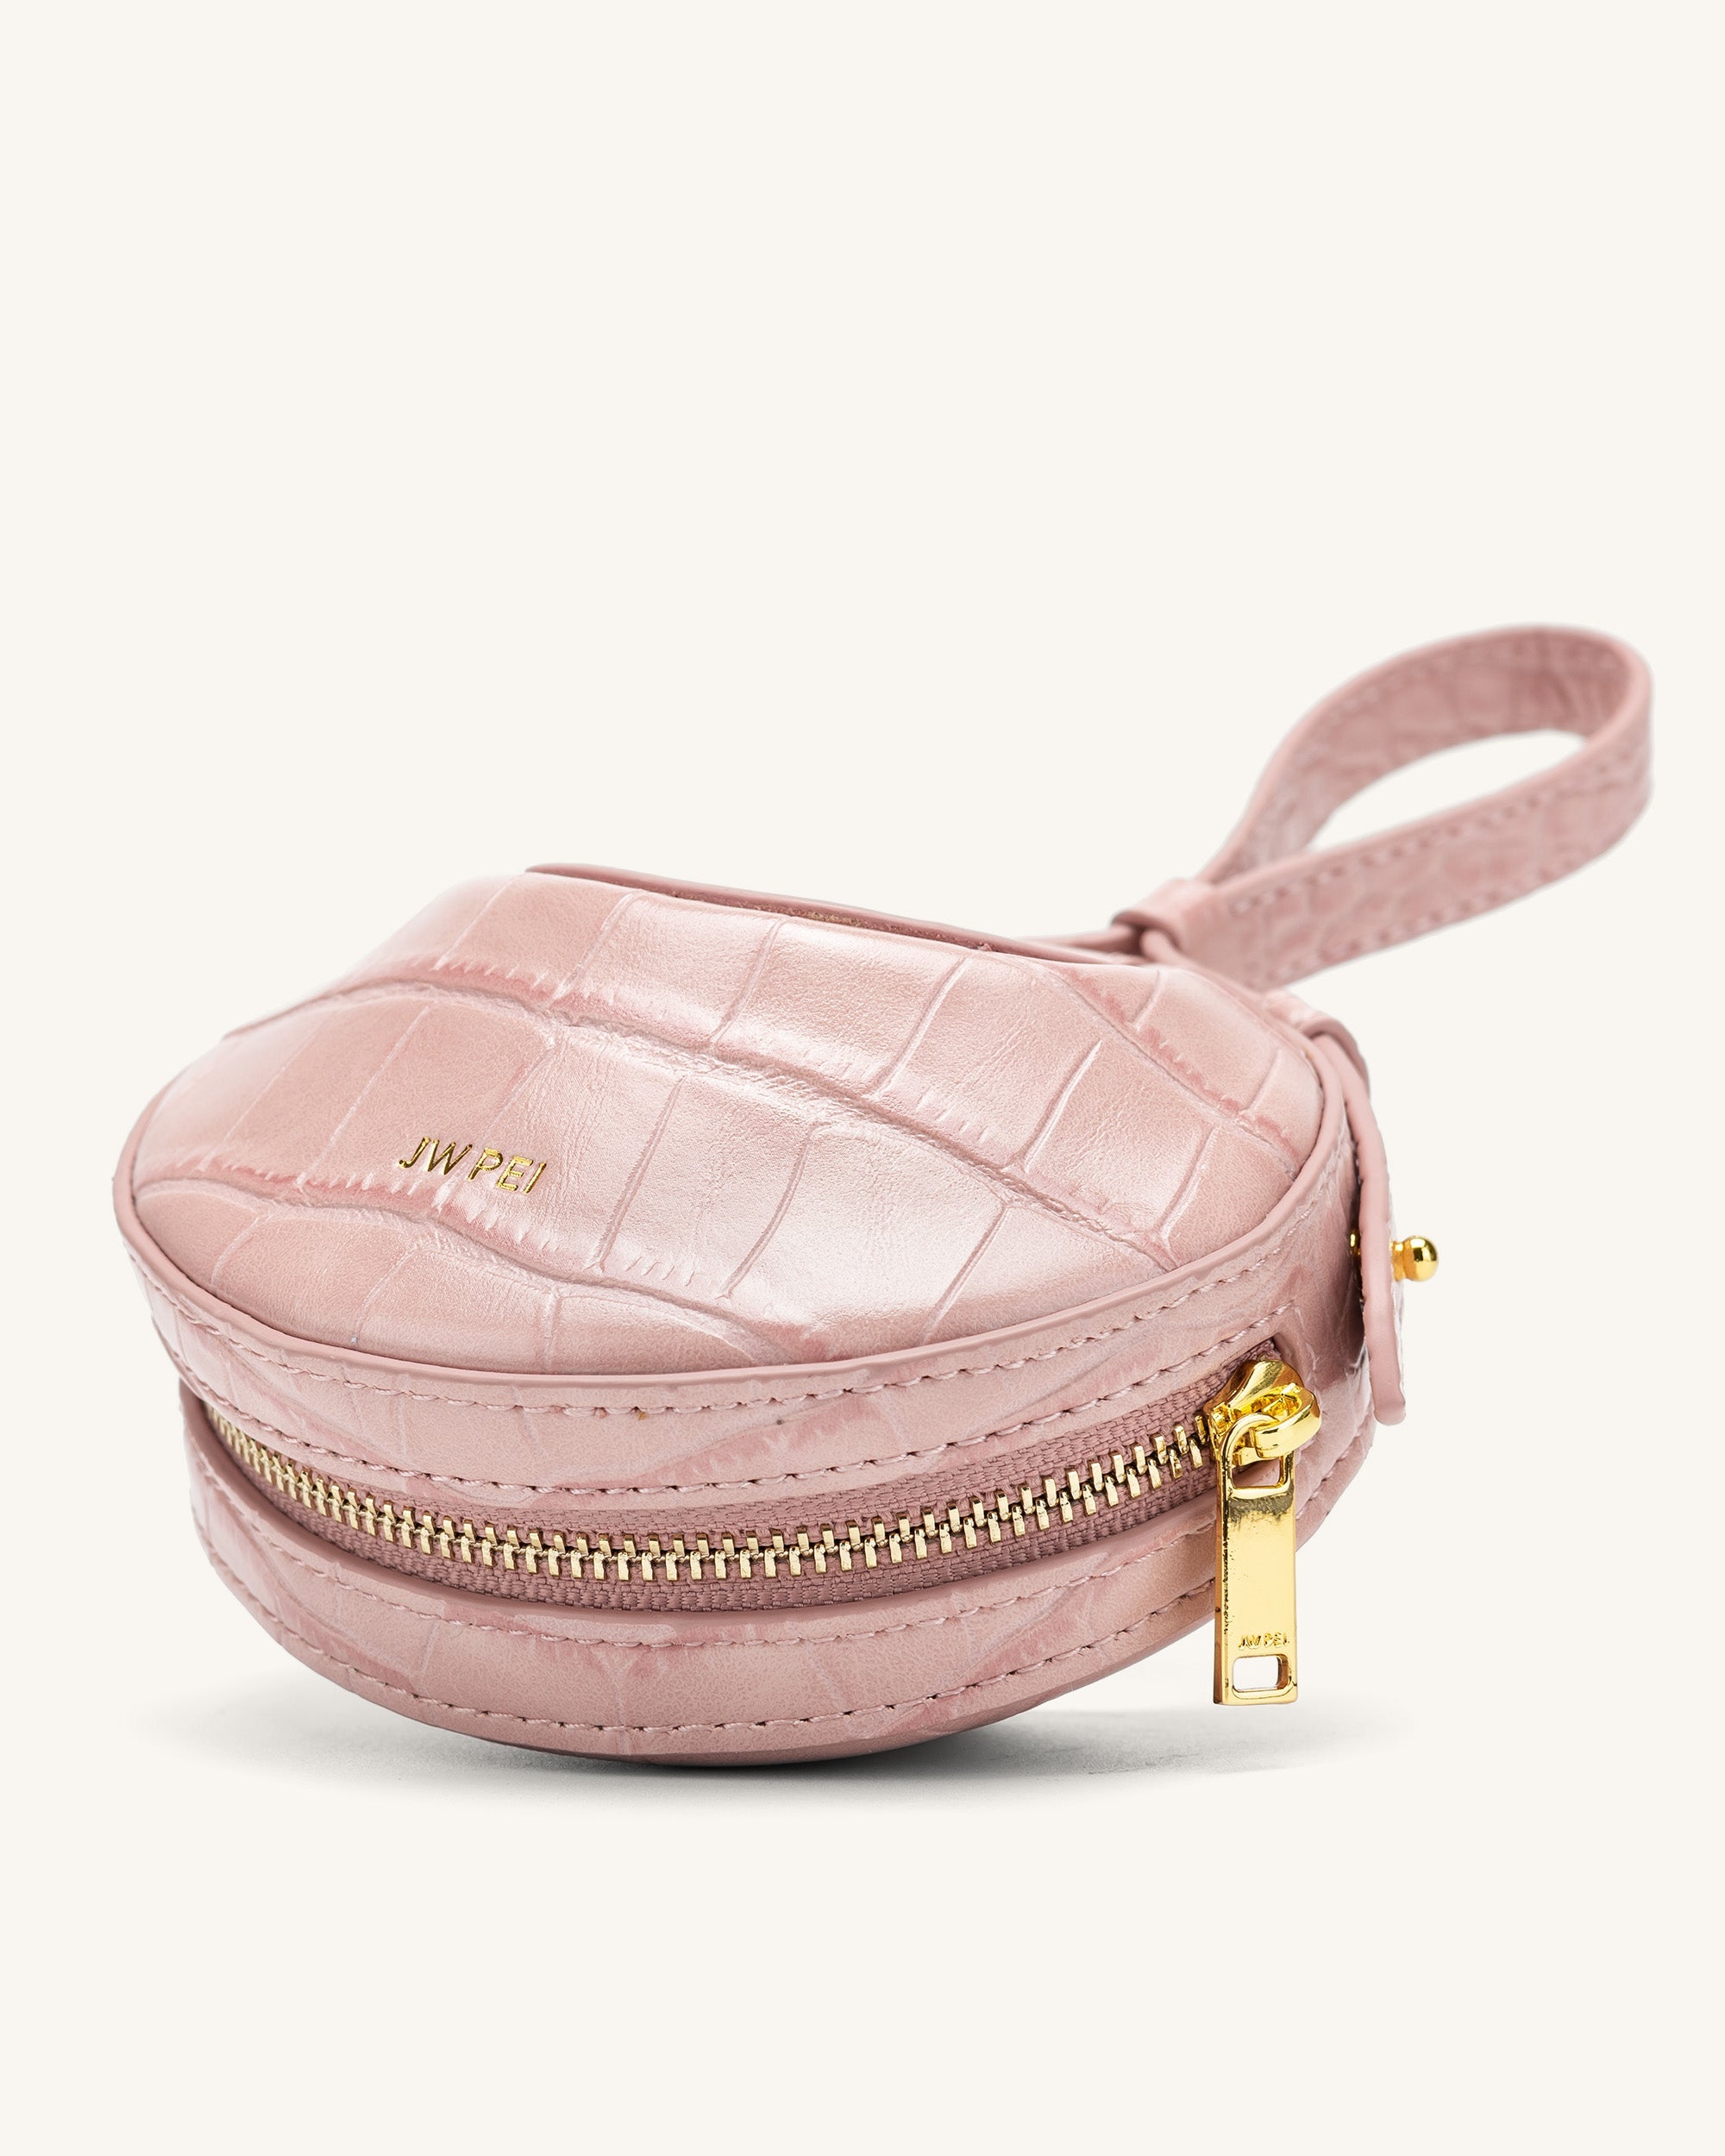 Rantan Bag - Pink Croc - Vegan Leather - JW PEI Official Sale - JW